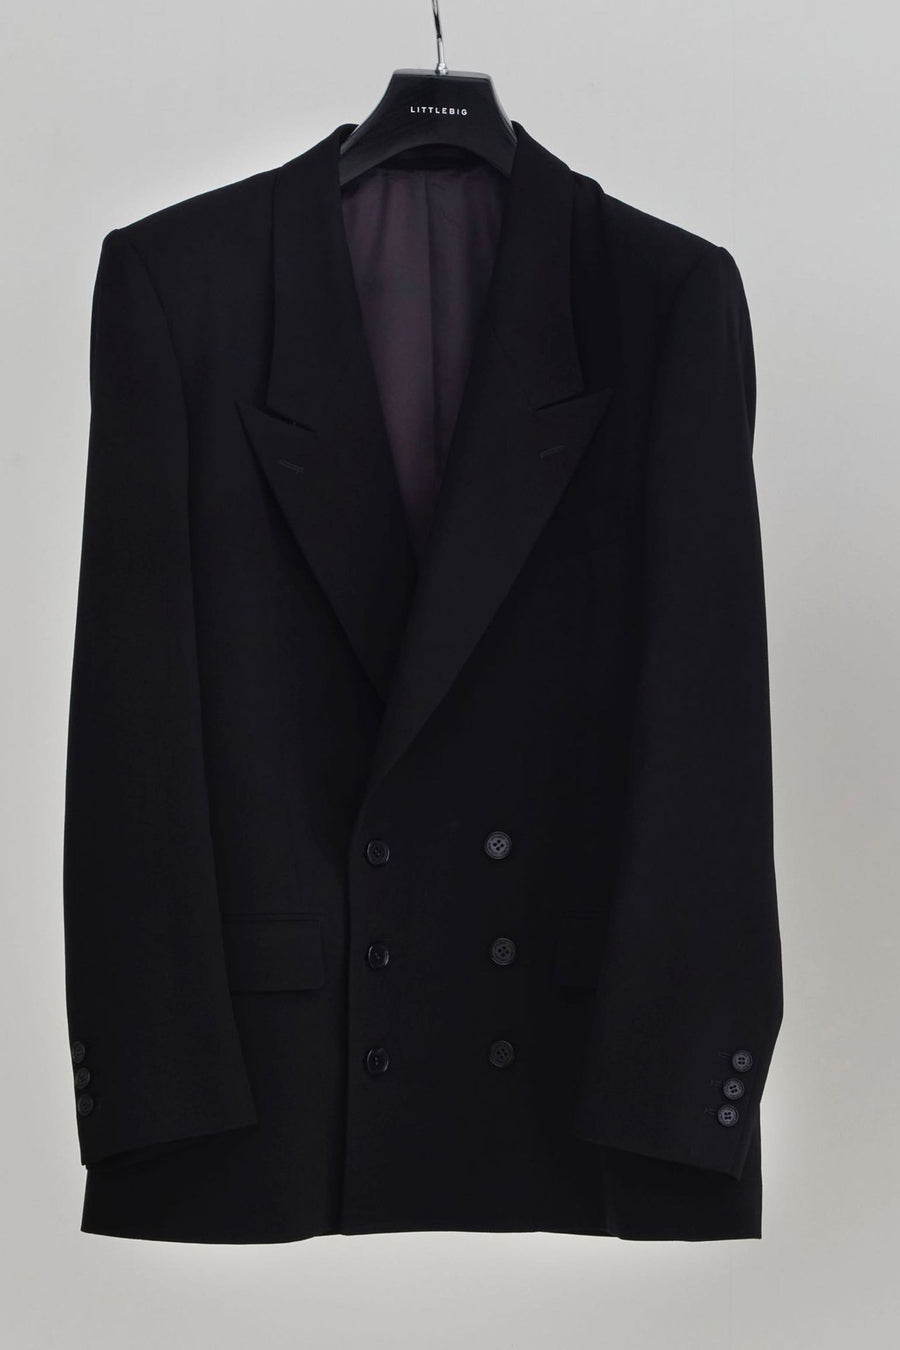 LITTLEBIG  Low 6B Jacket(Black or Beige)